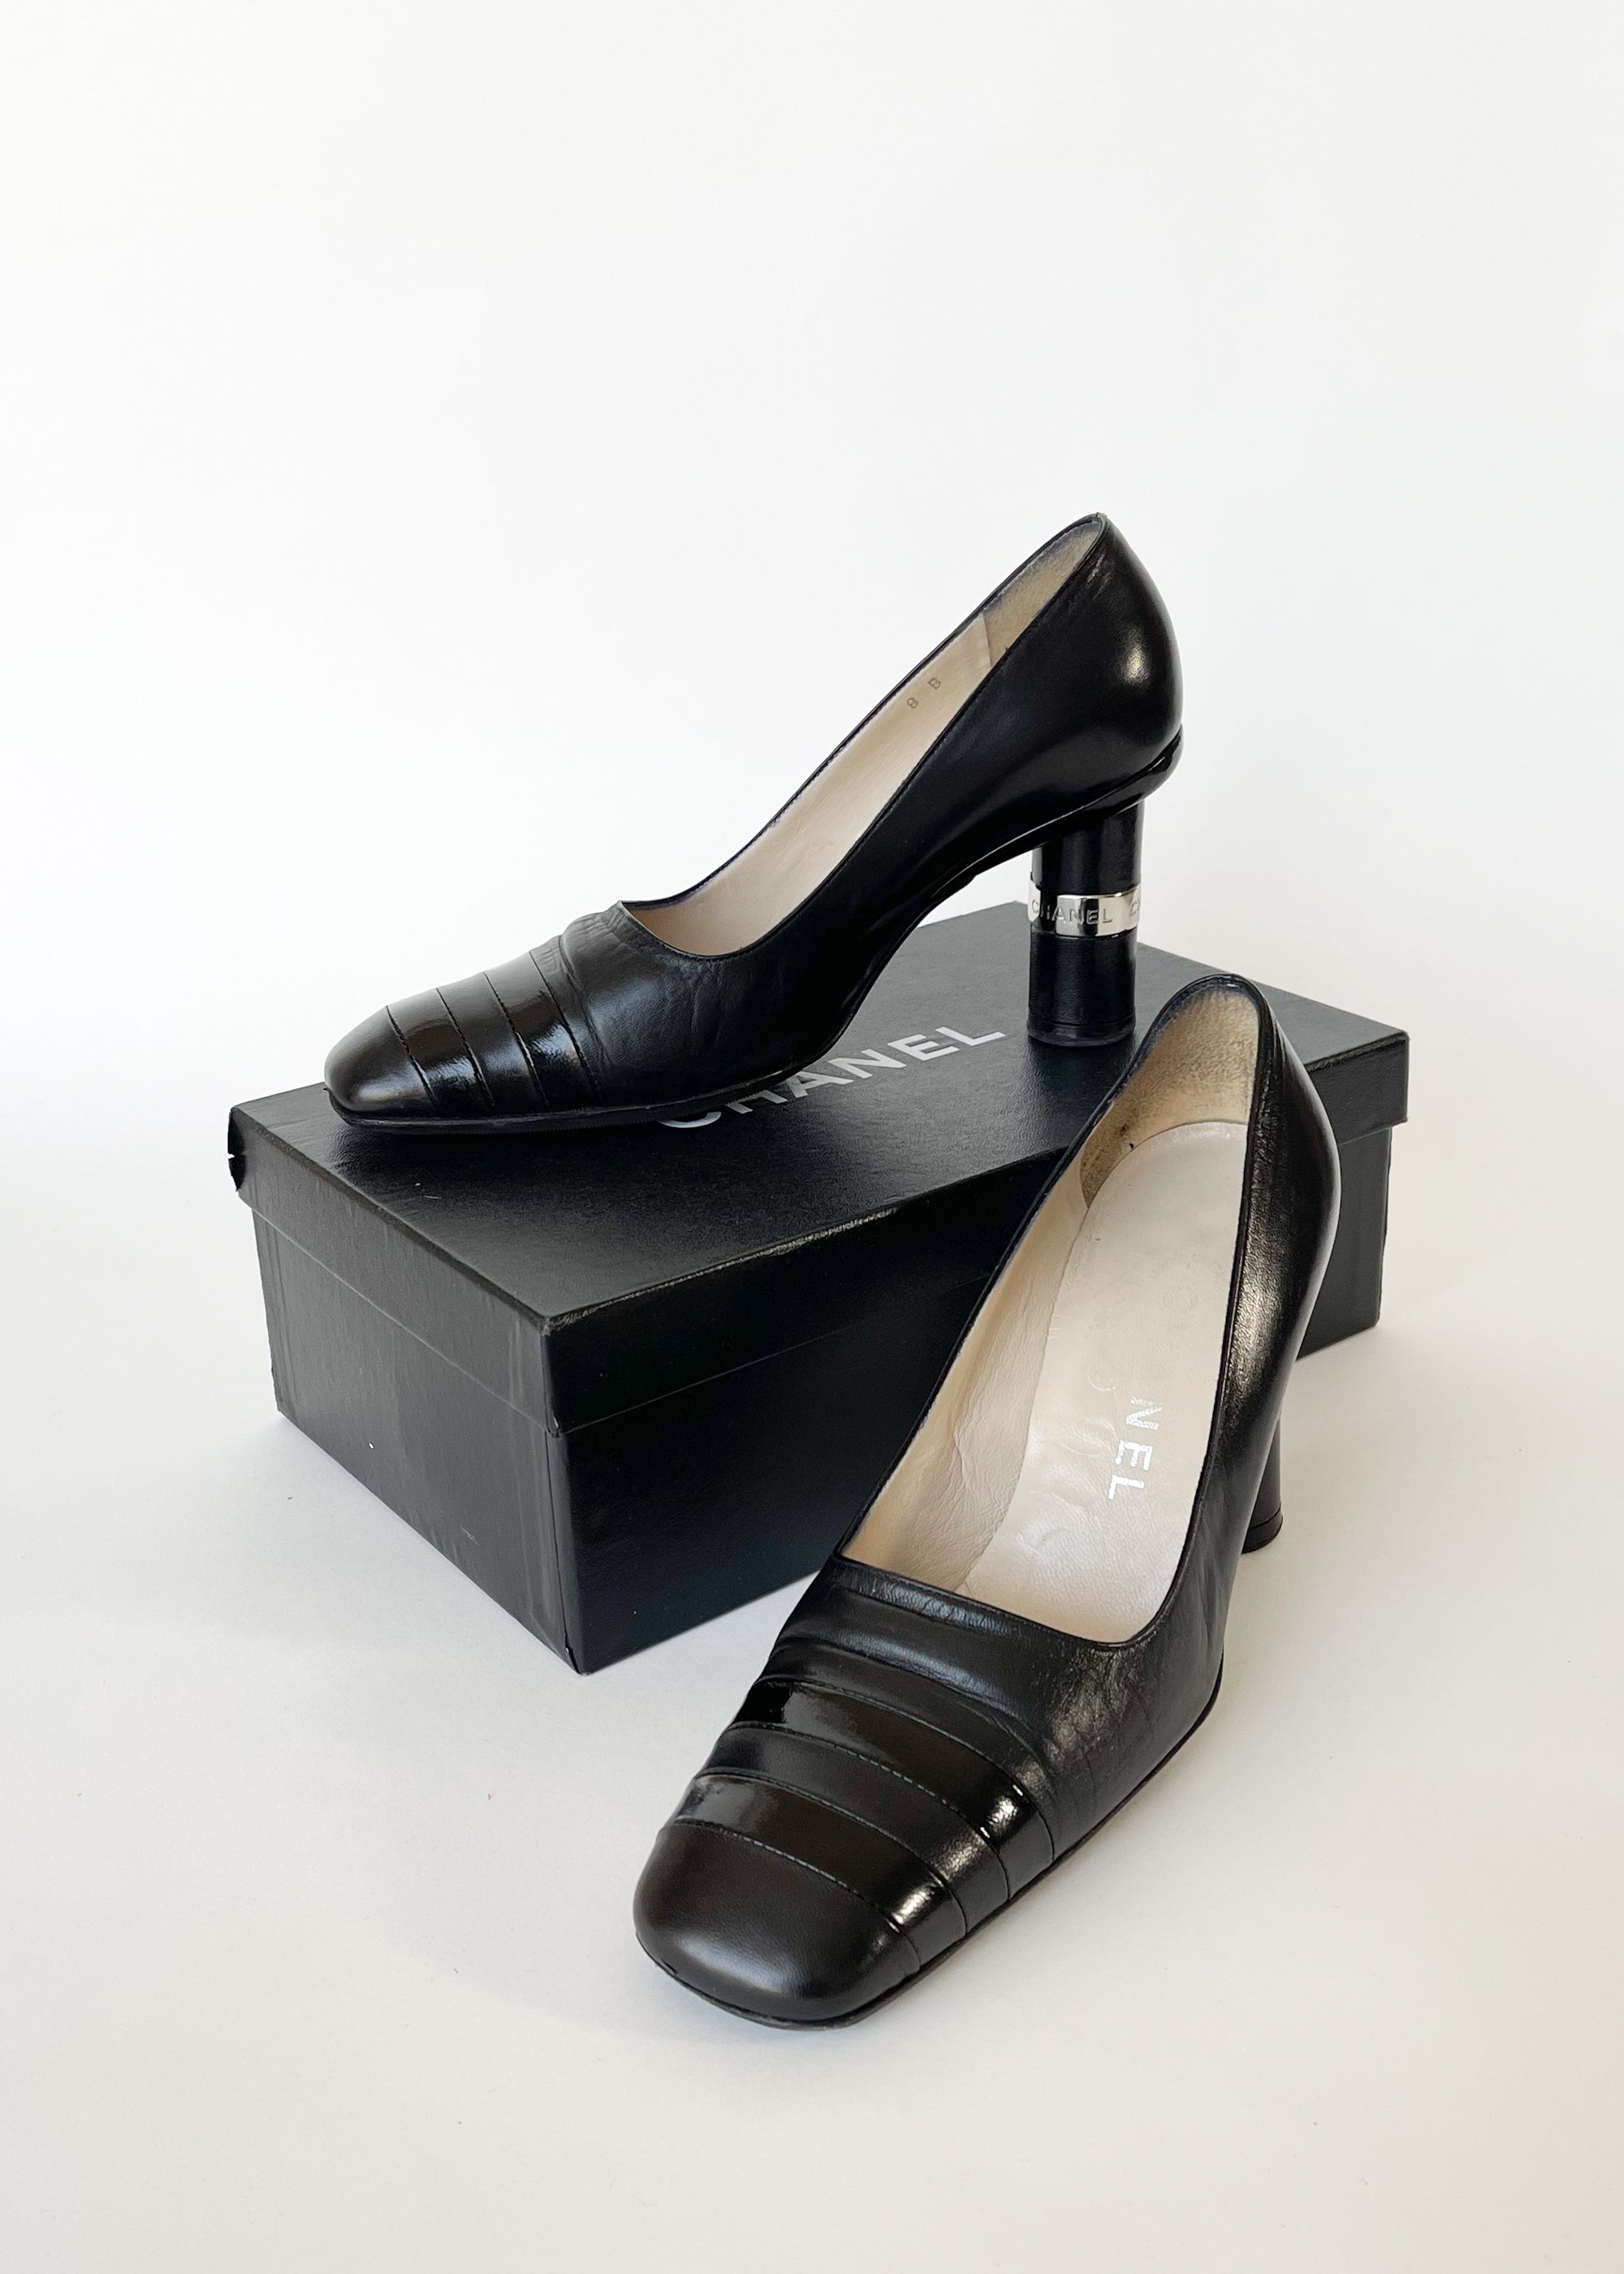 CHANEL, Shoes, Vintage Chanel Patent Shoes